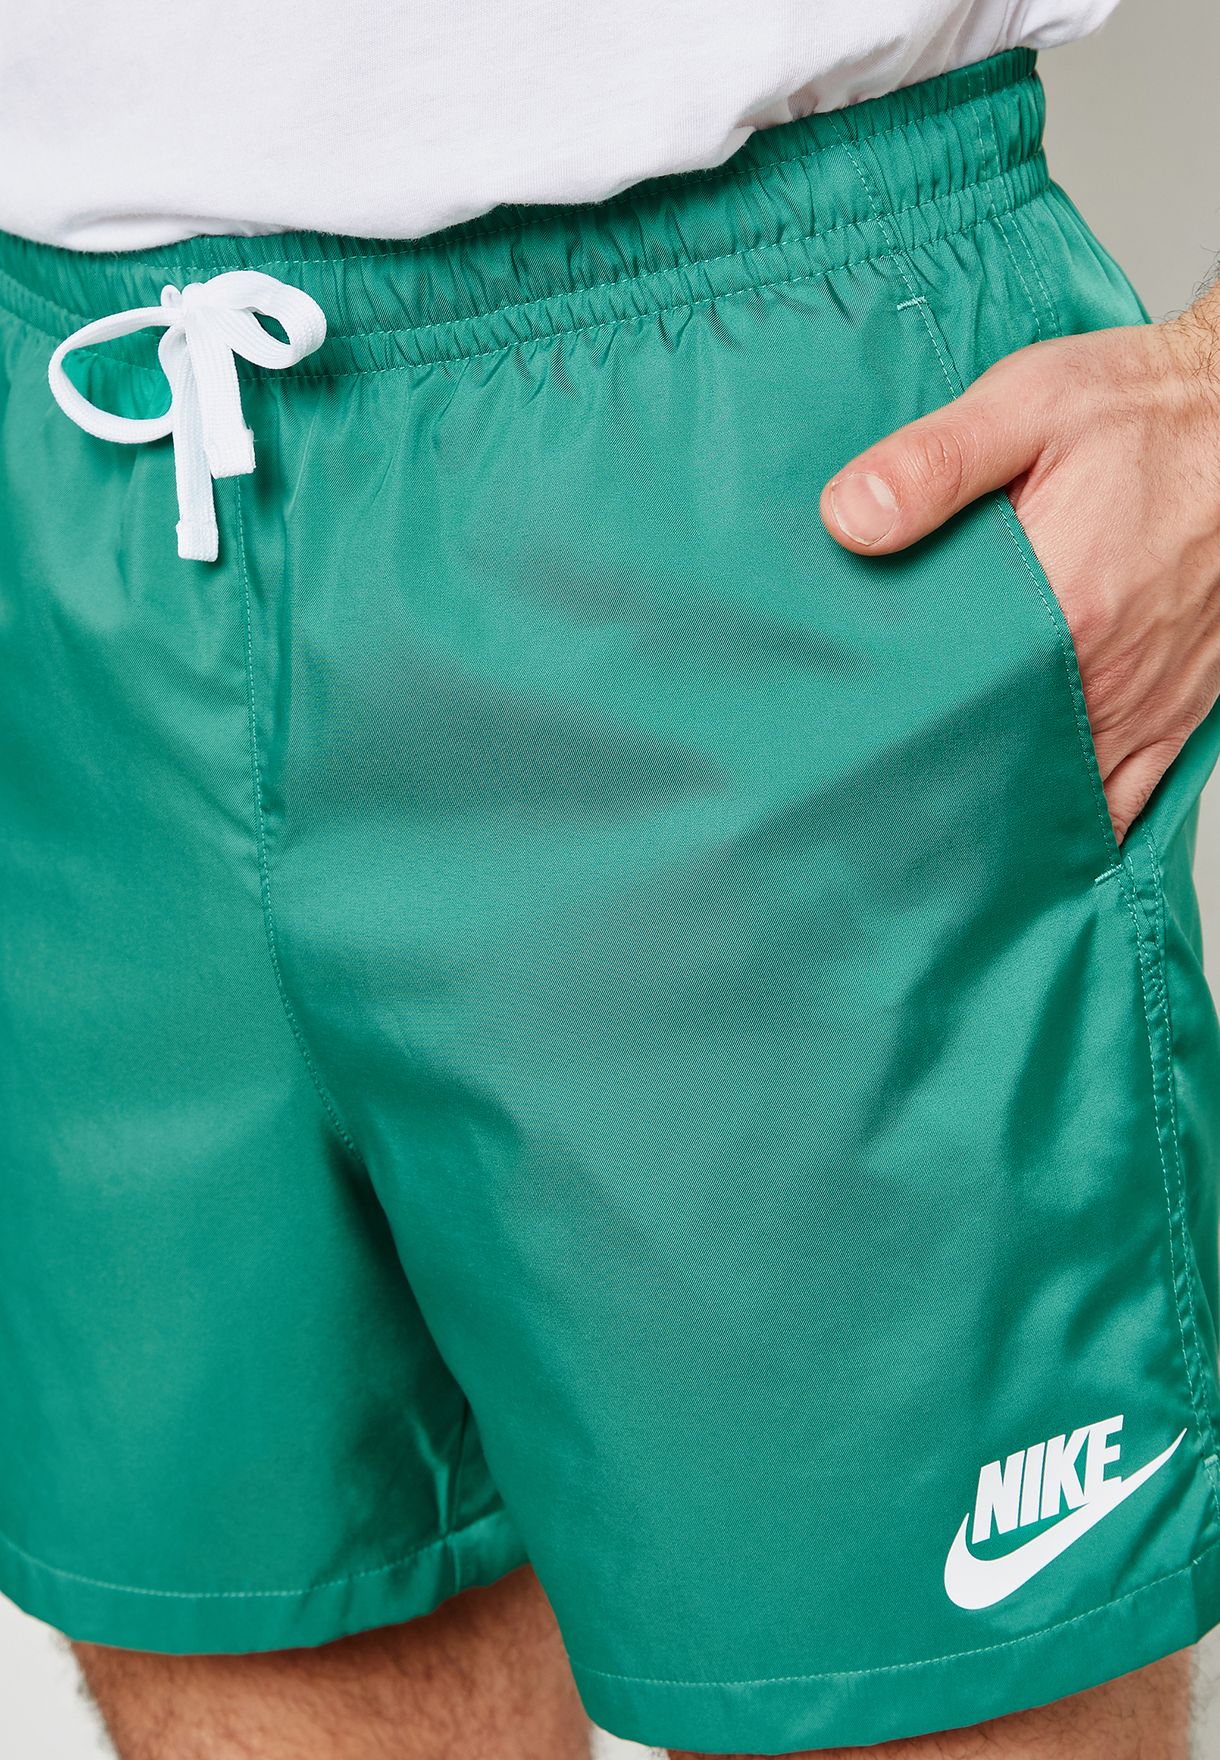 Buy > nike woven flow shorts green > in stock